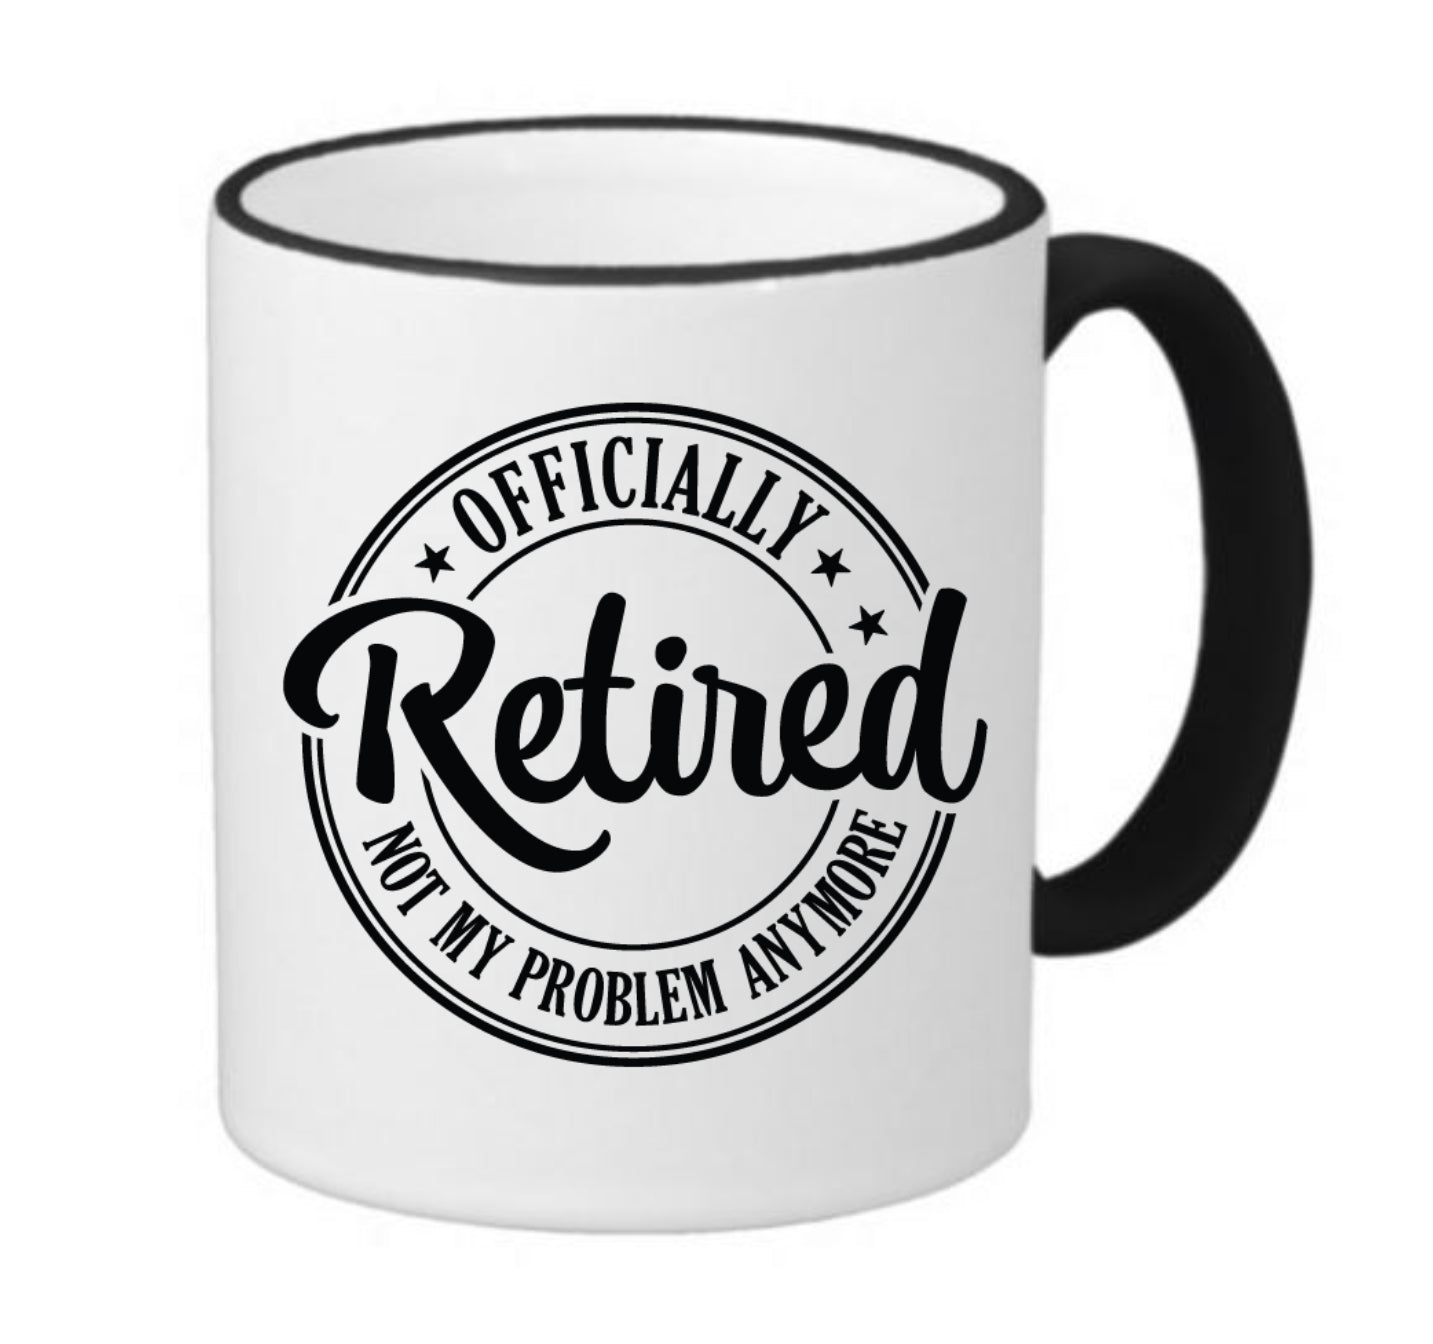 Retirement Coffee Mug, Not my Problem, 11oz, 15oz, 20oz, Black Ringer Coffee Mug 11oz, Stainless Steel Travel Mug 14oz Ceramic Drinkware